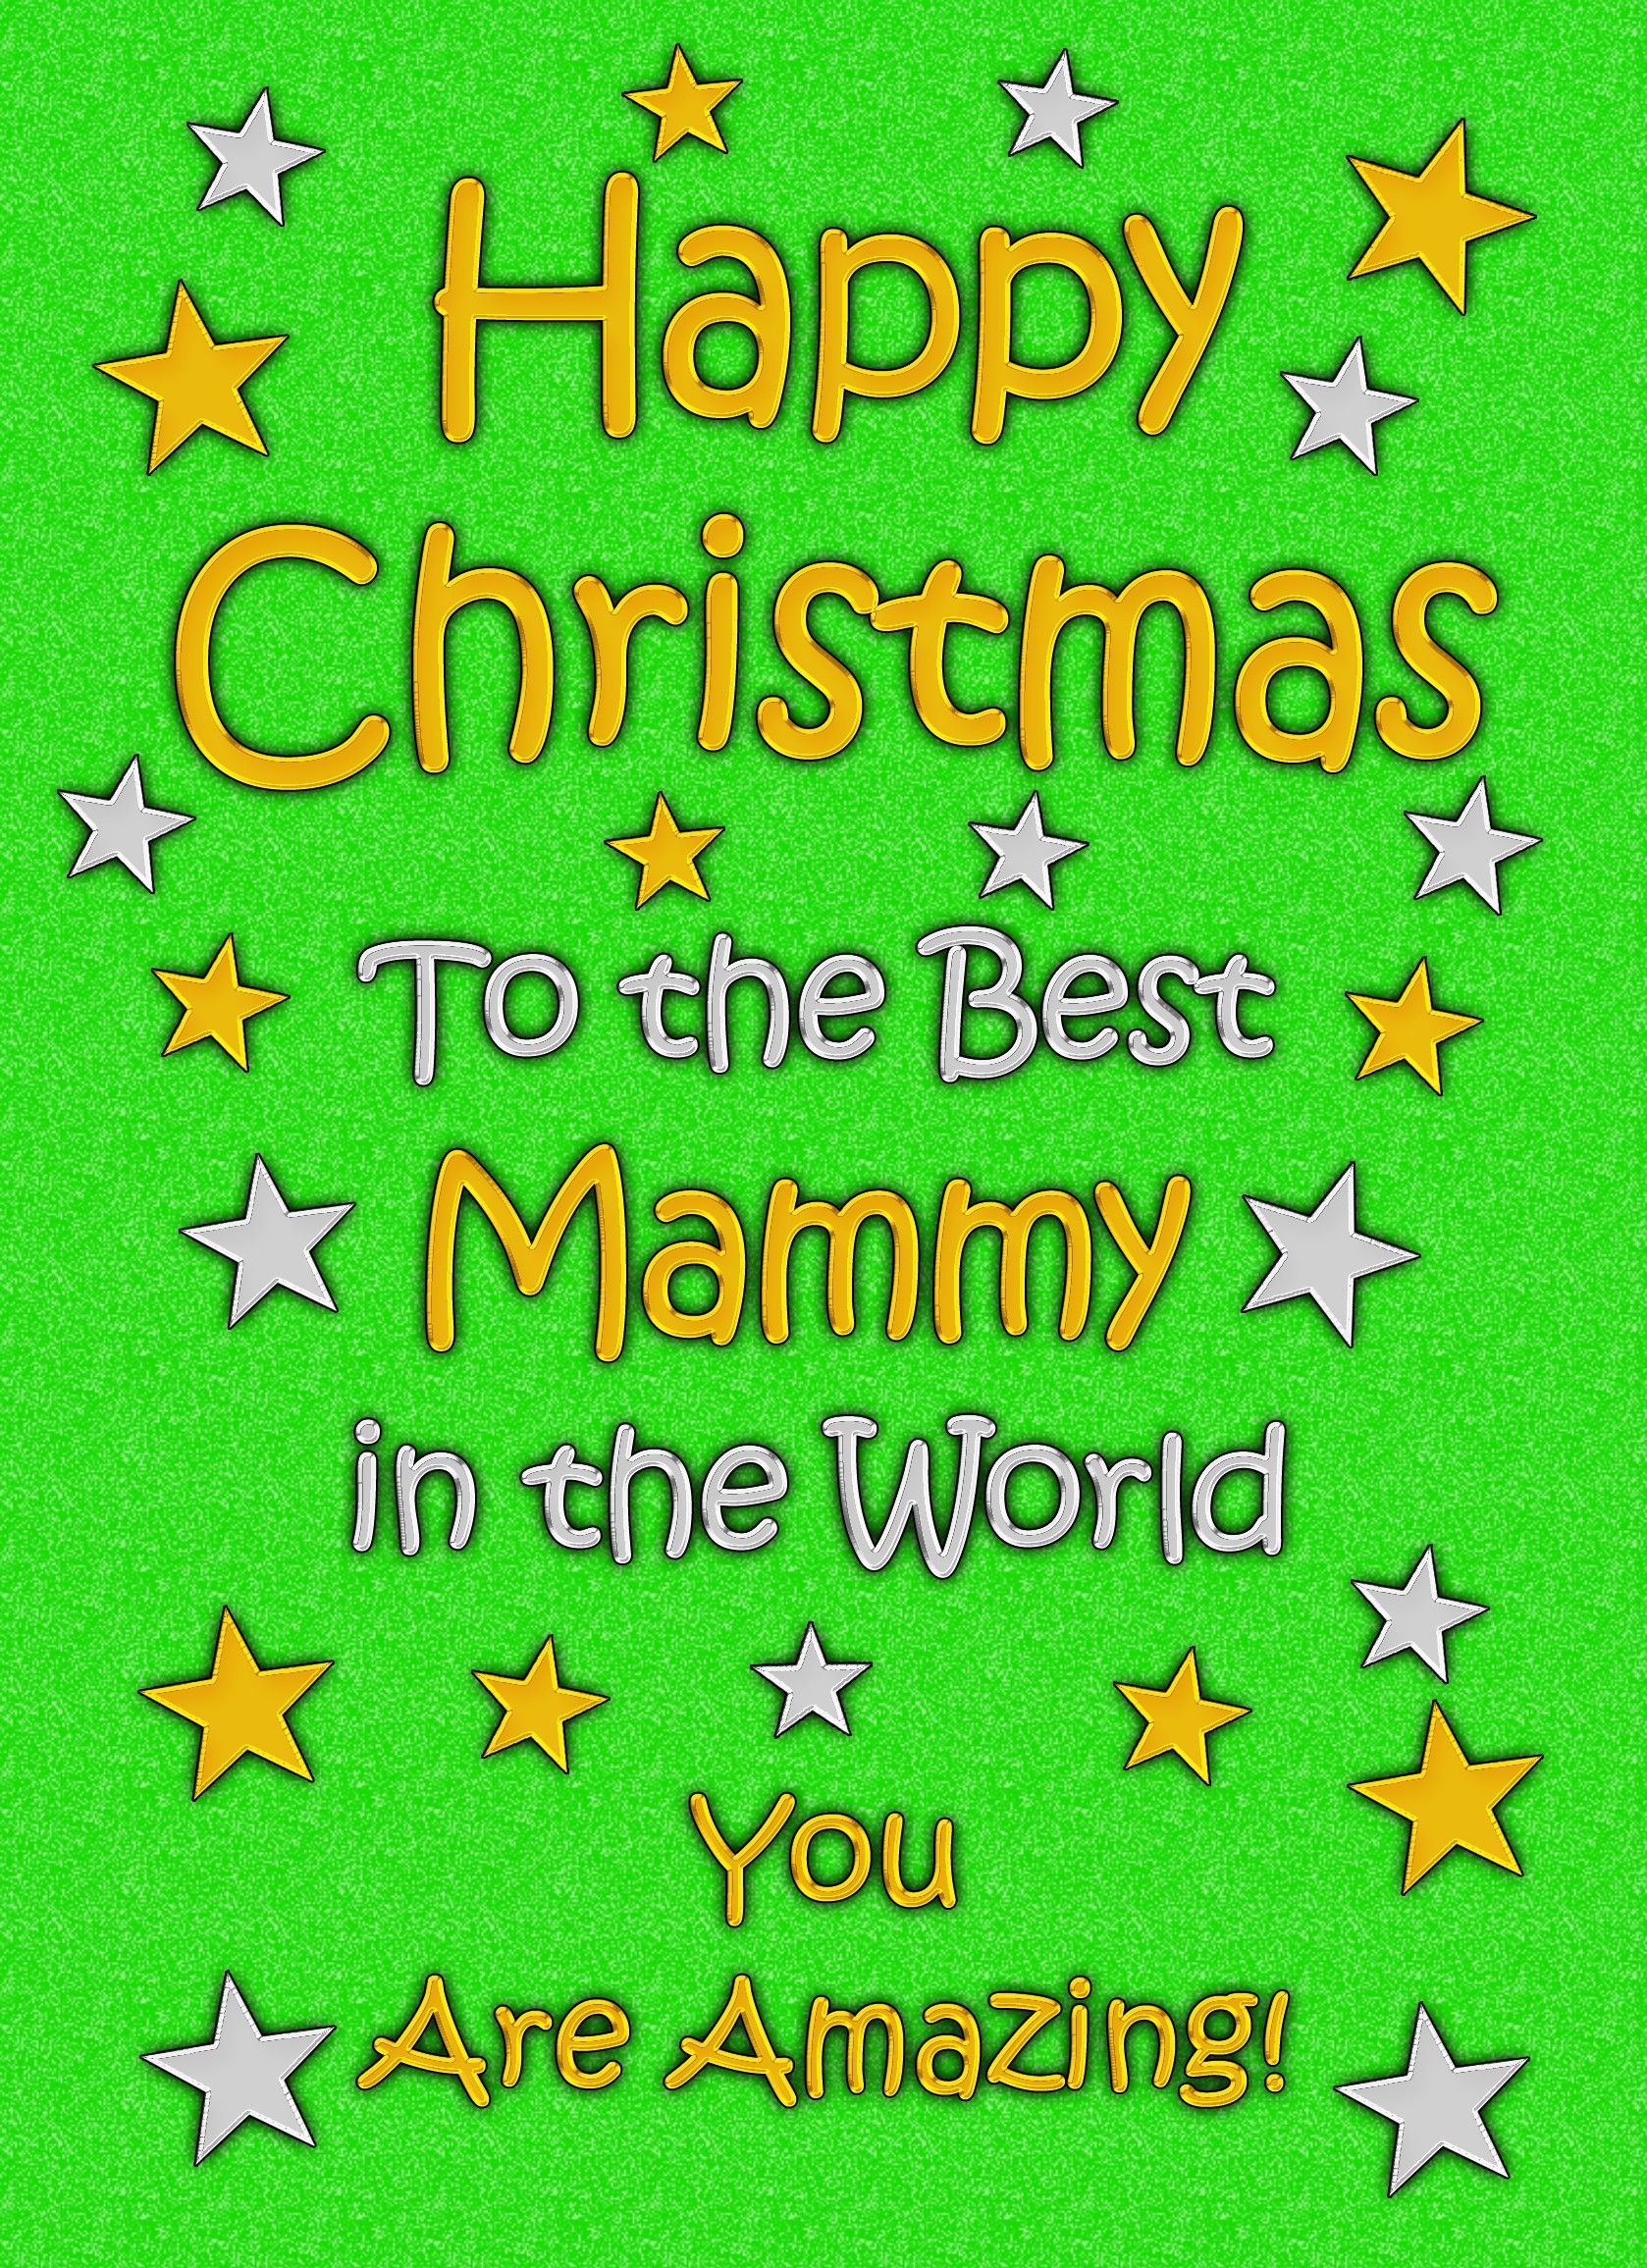 Mammy Christmas Card (Green)